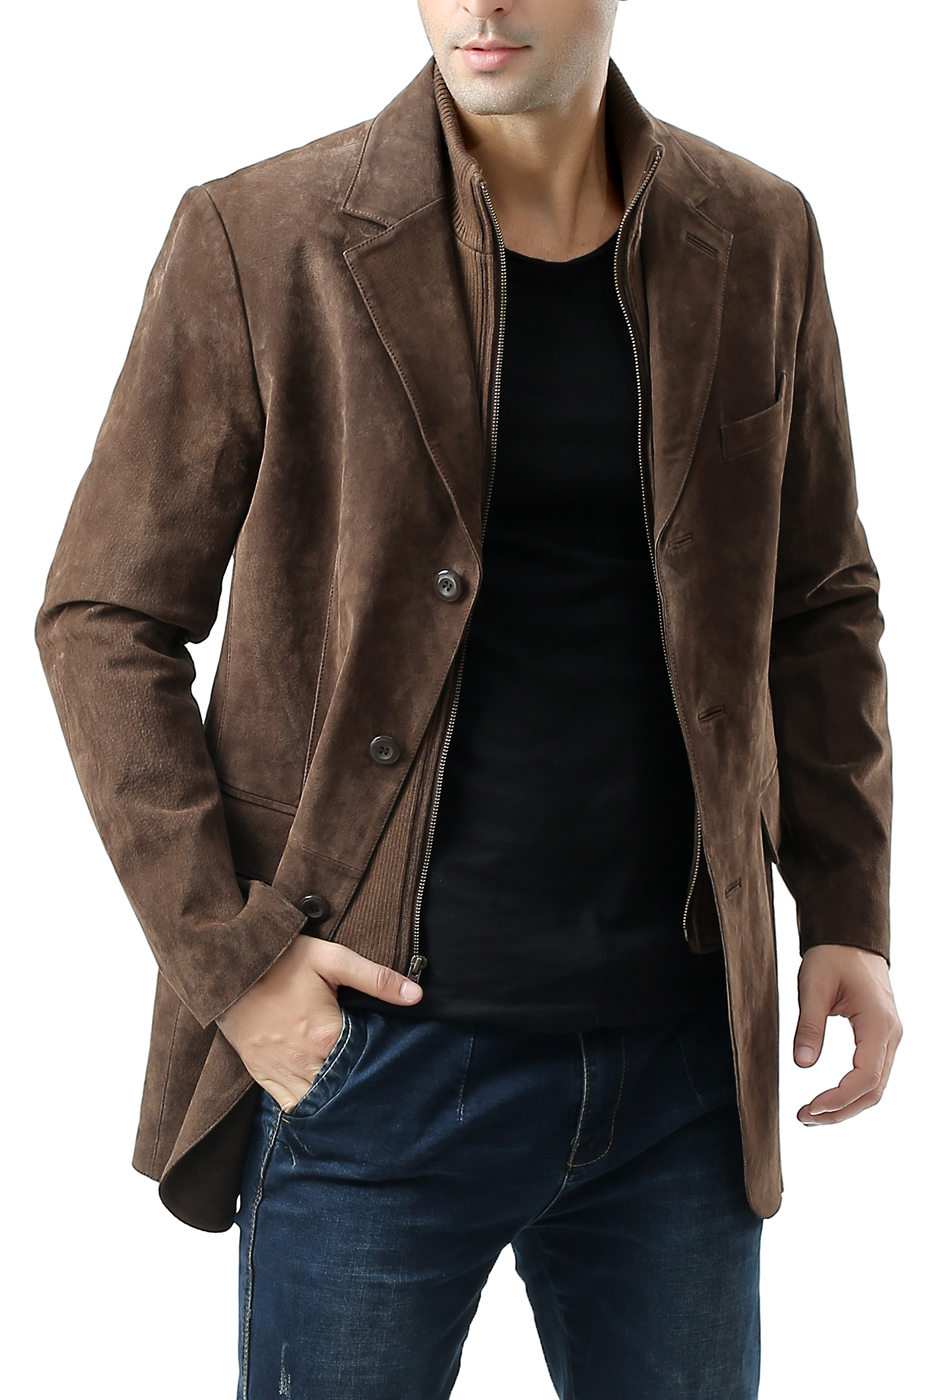 BGSD Men's Brett Leather Jacket Suede Sport Coat Jacket - Regular and Tall